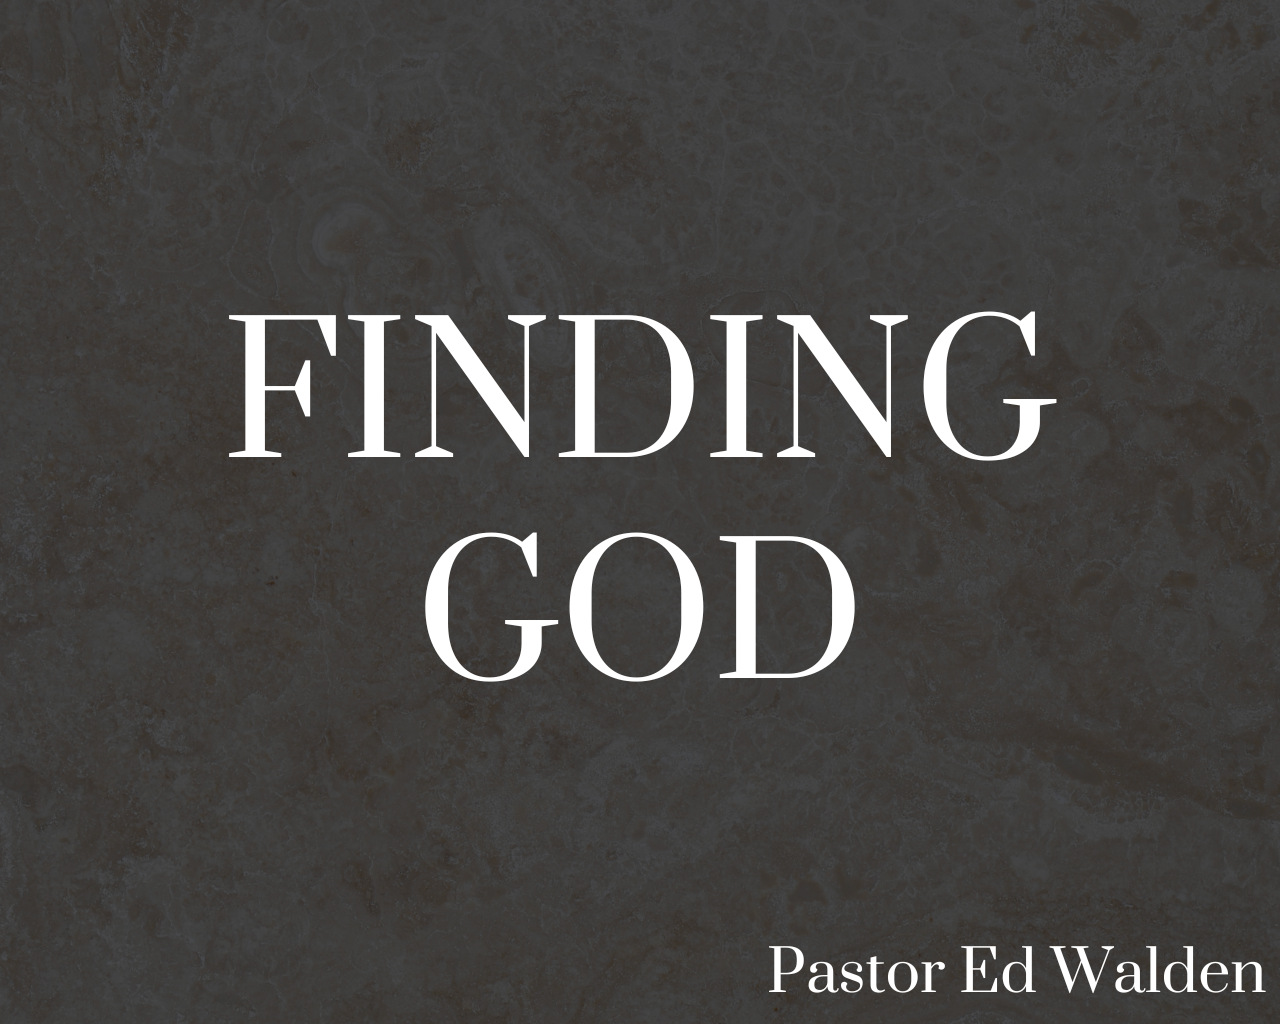 Finding God